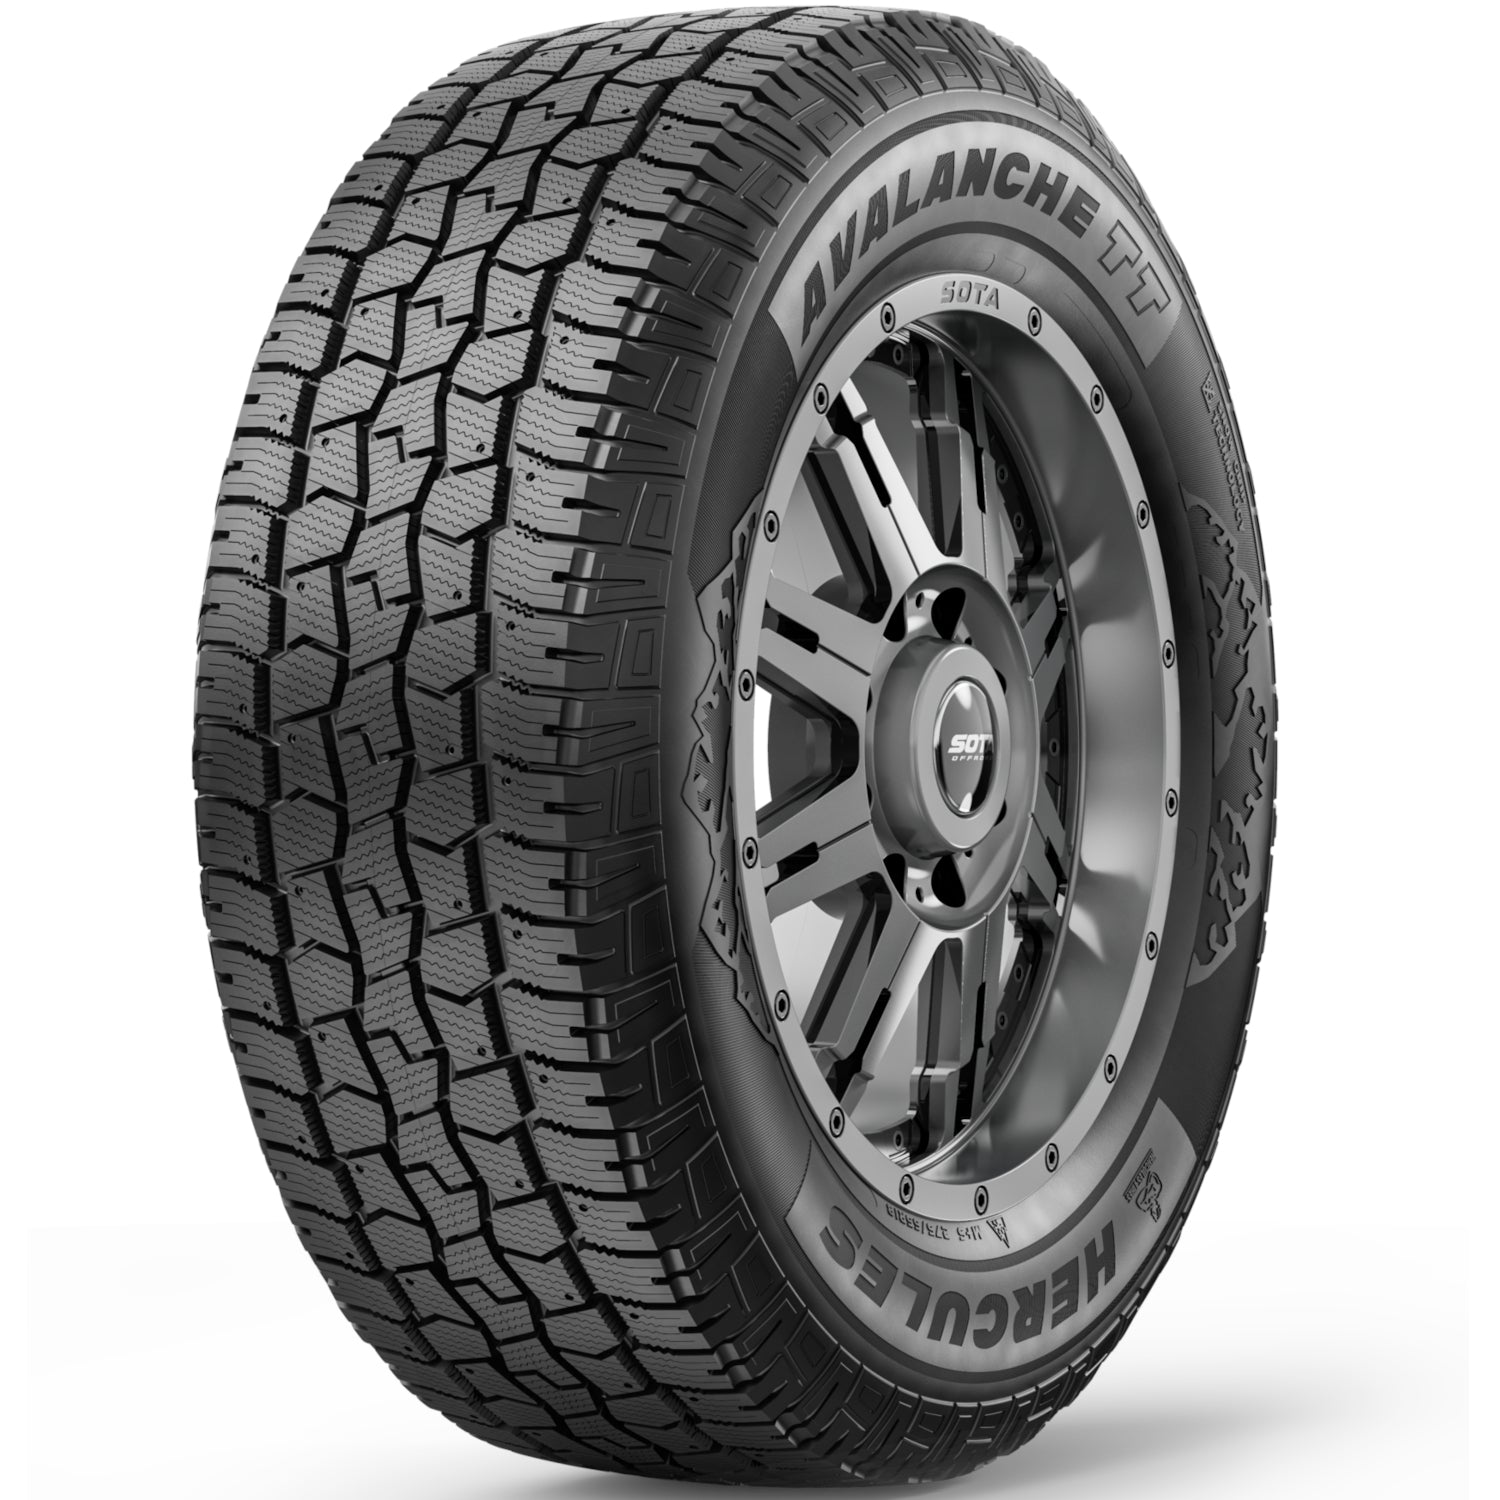 HERCULES AVALANCHE TT LT265/75R16 (31.8X10.4R 16) Tires